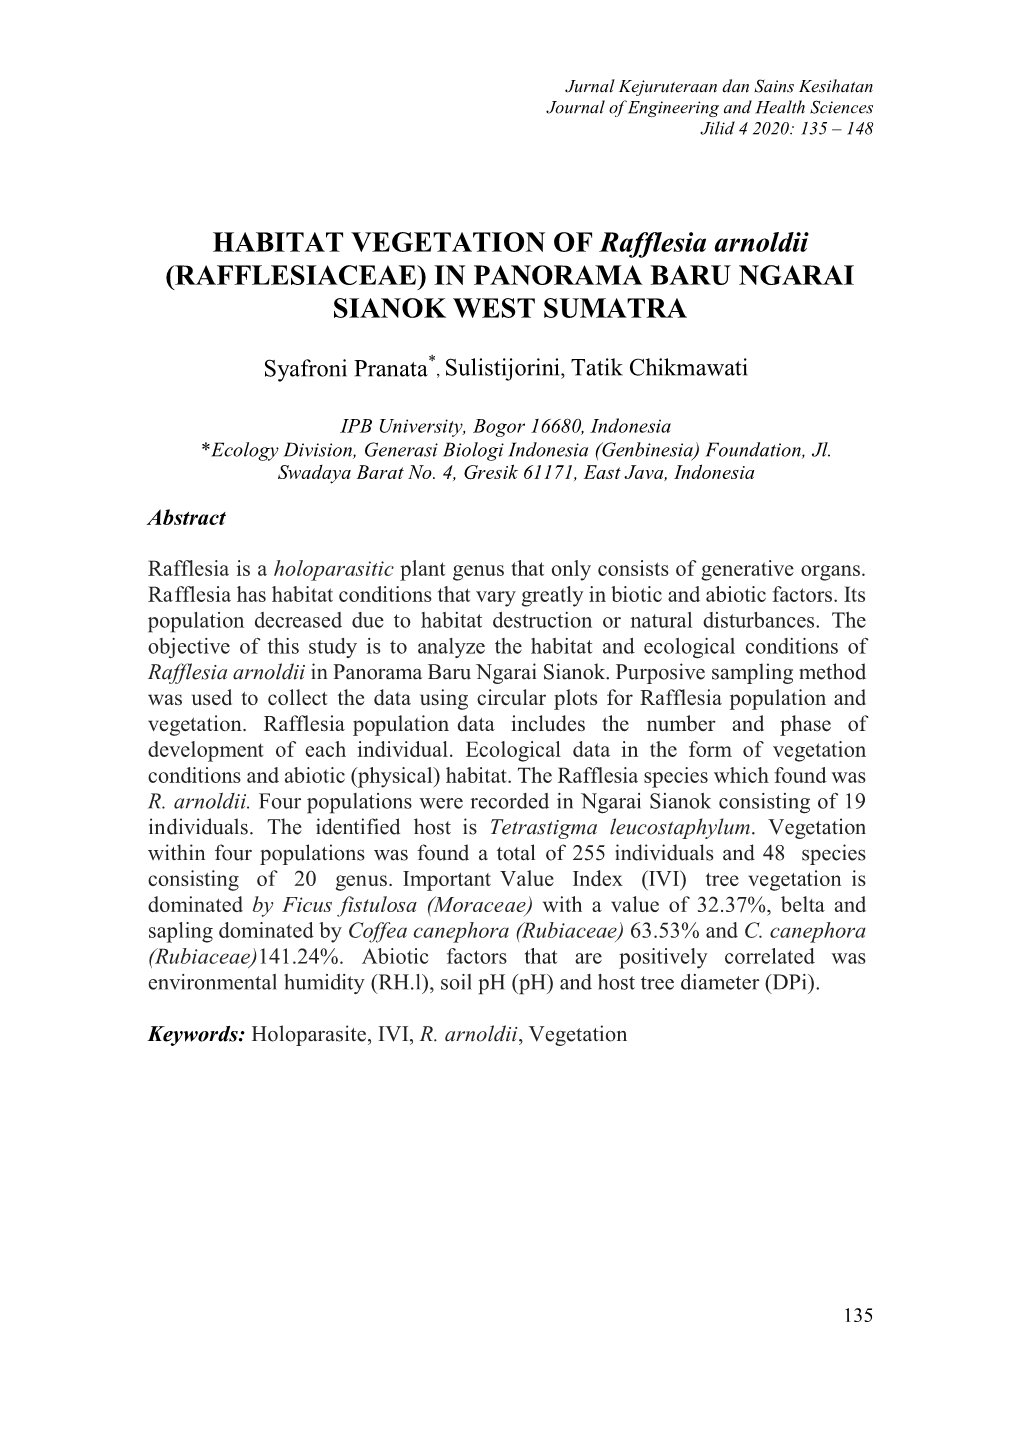 HABITAT VEGETATION of Rafflesia Arnoldii (RAFFLESIACEAE) in PANORAMA BARU NGARAI SIANOK WEST SUMATRA